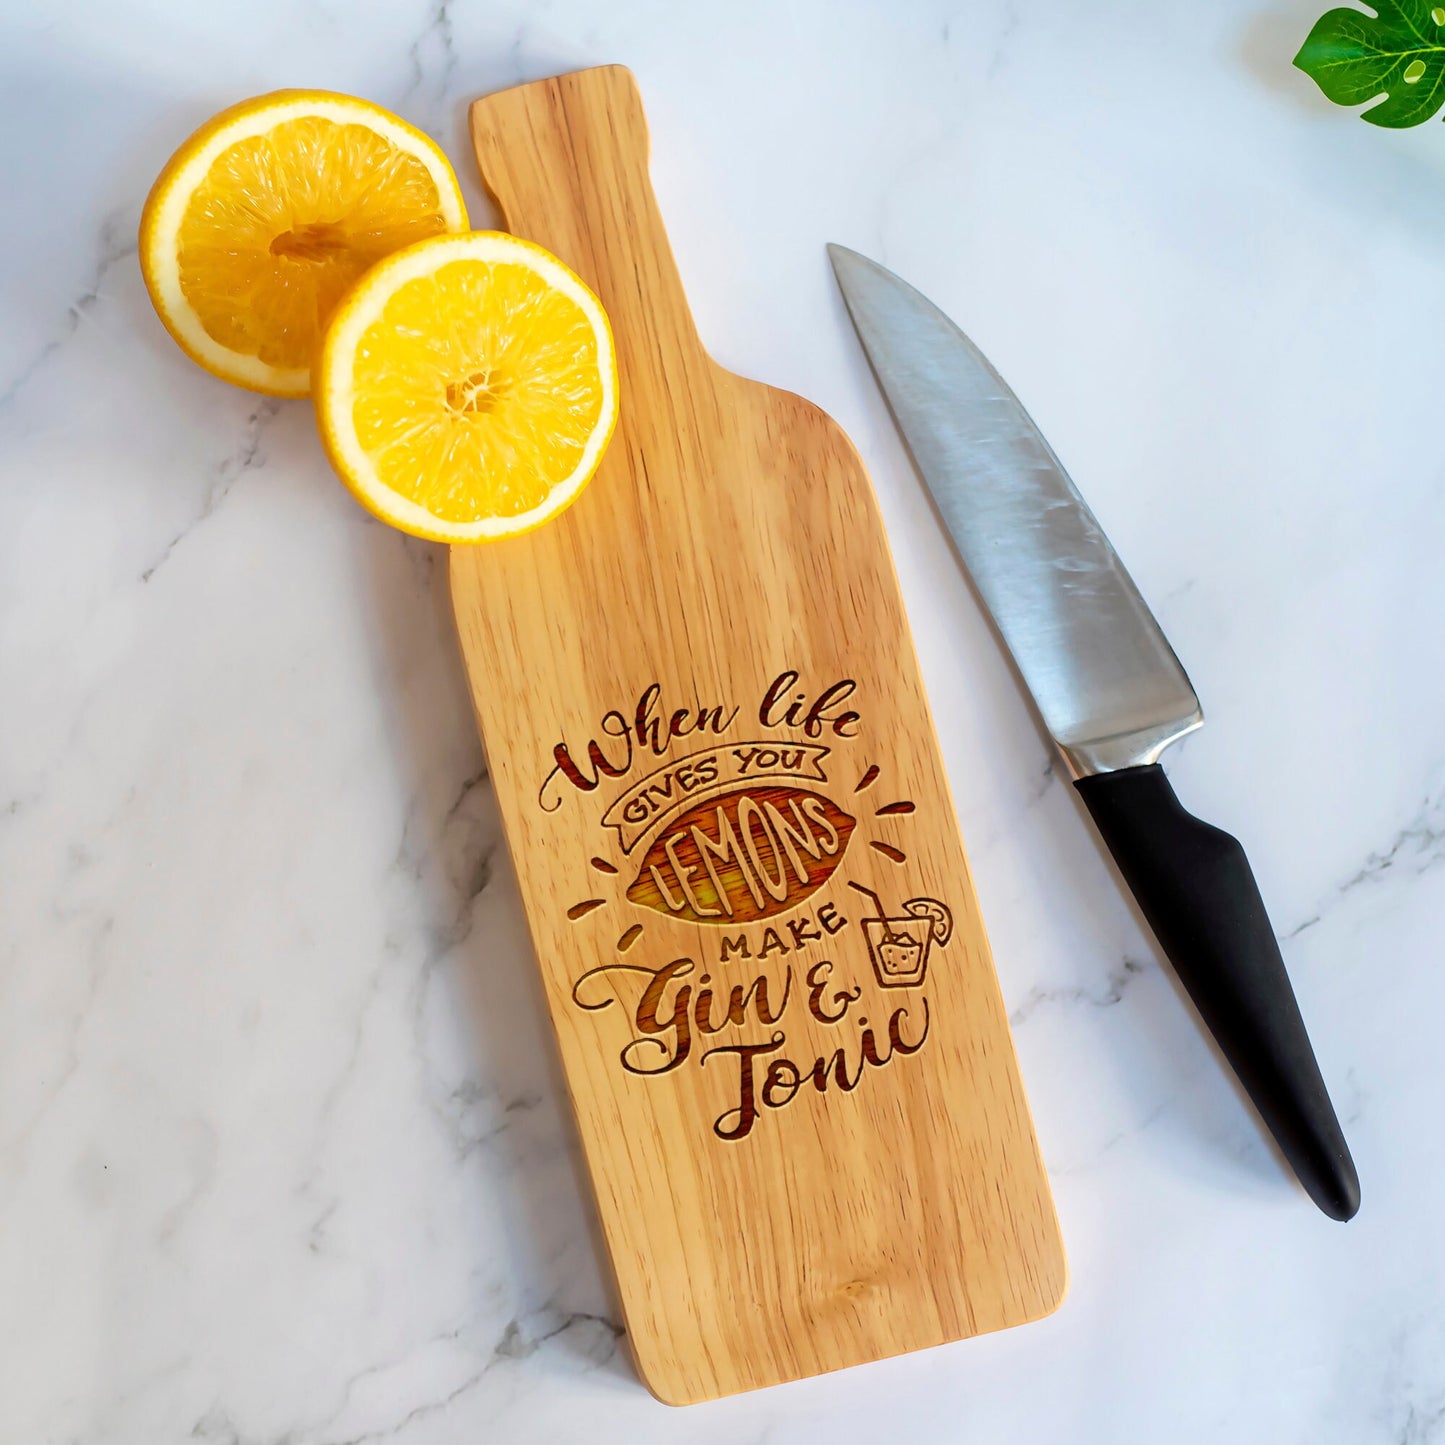 Life Gives you Lemons Make Gin & Tonic - Bottle Chopping Board Gift